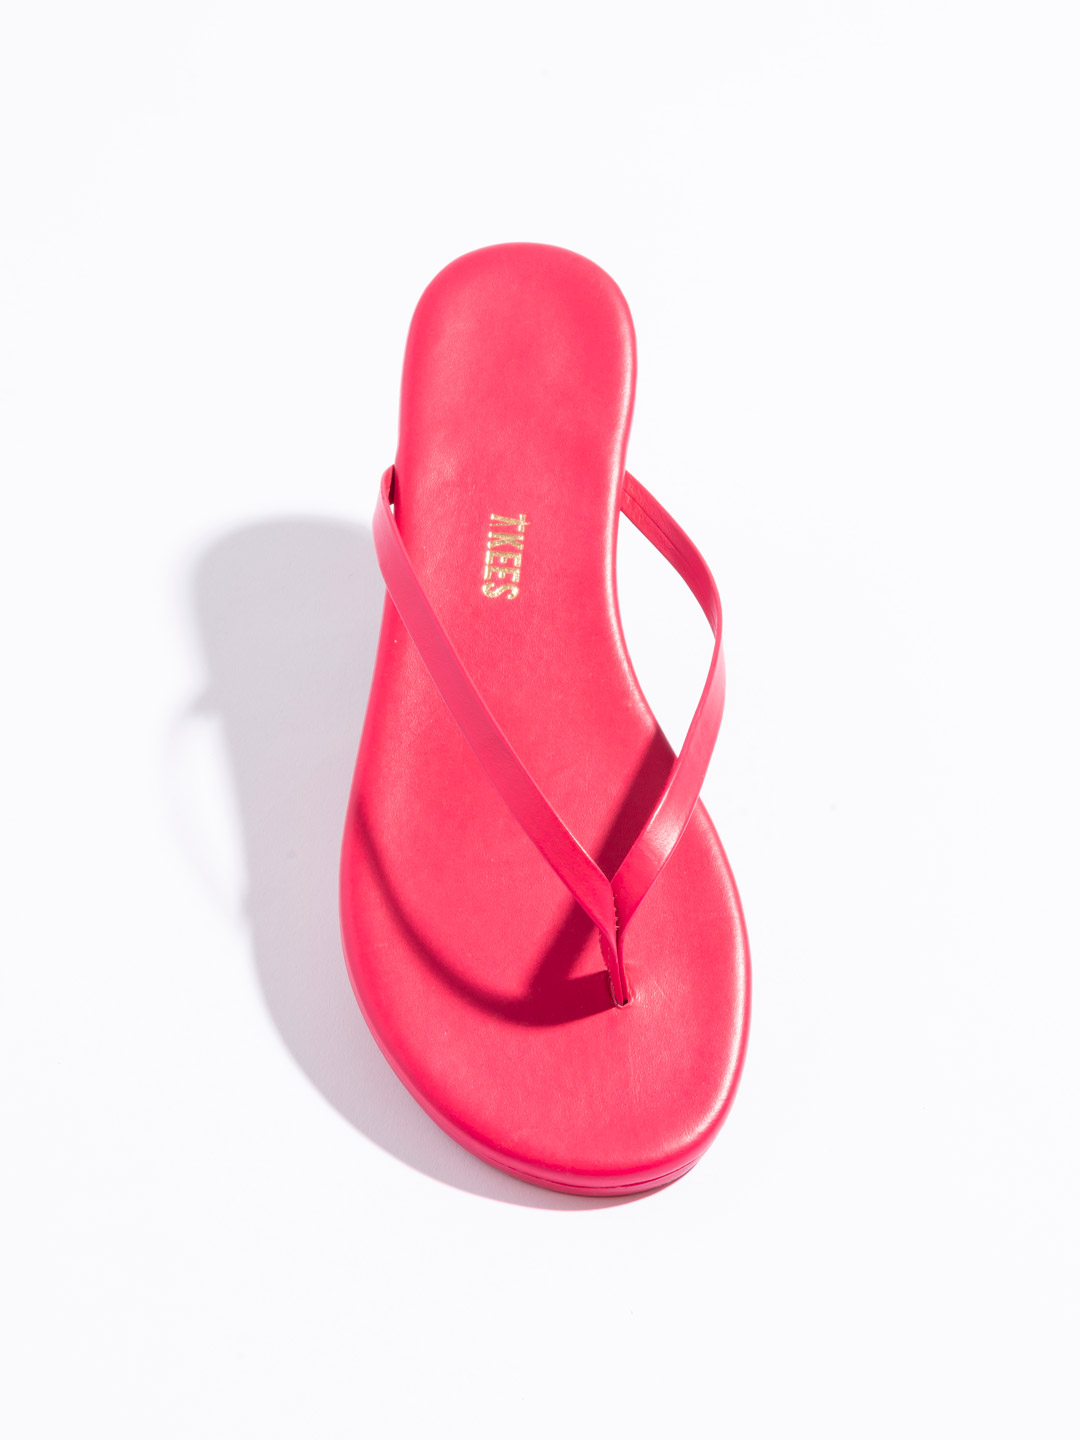 Most Loved Signature Flip Flop Sandals - Pink